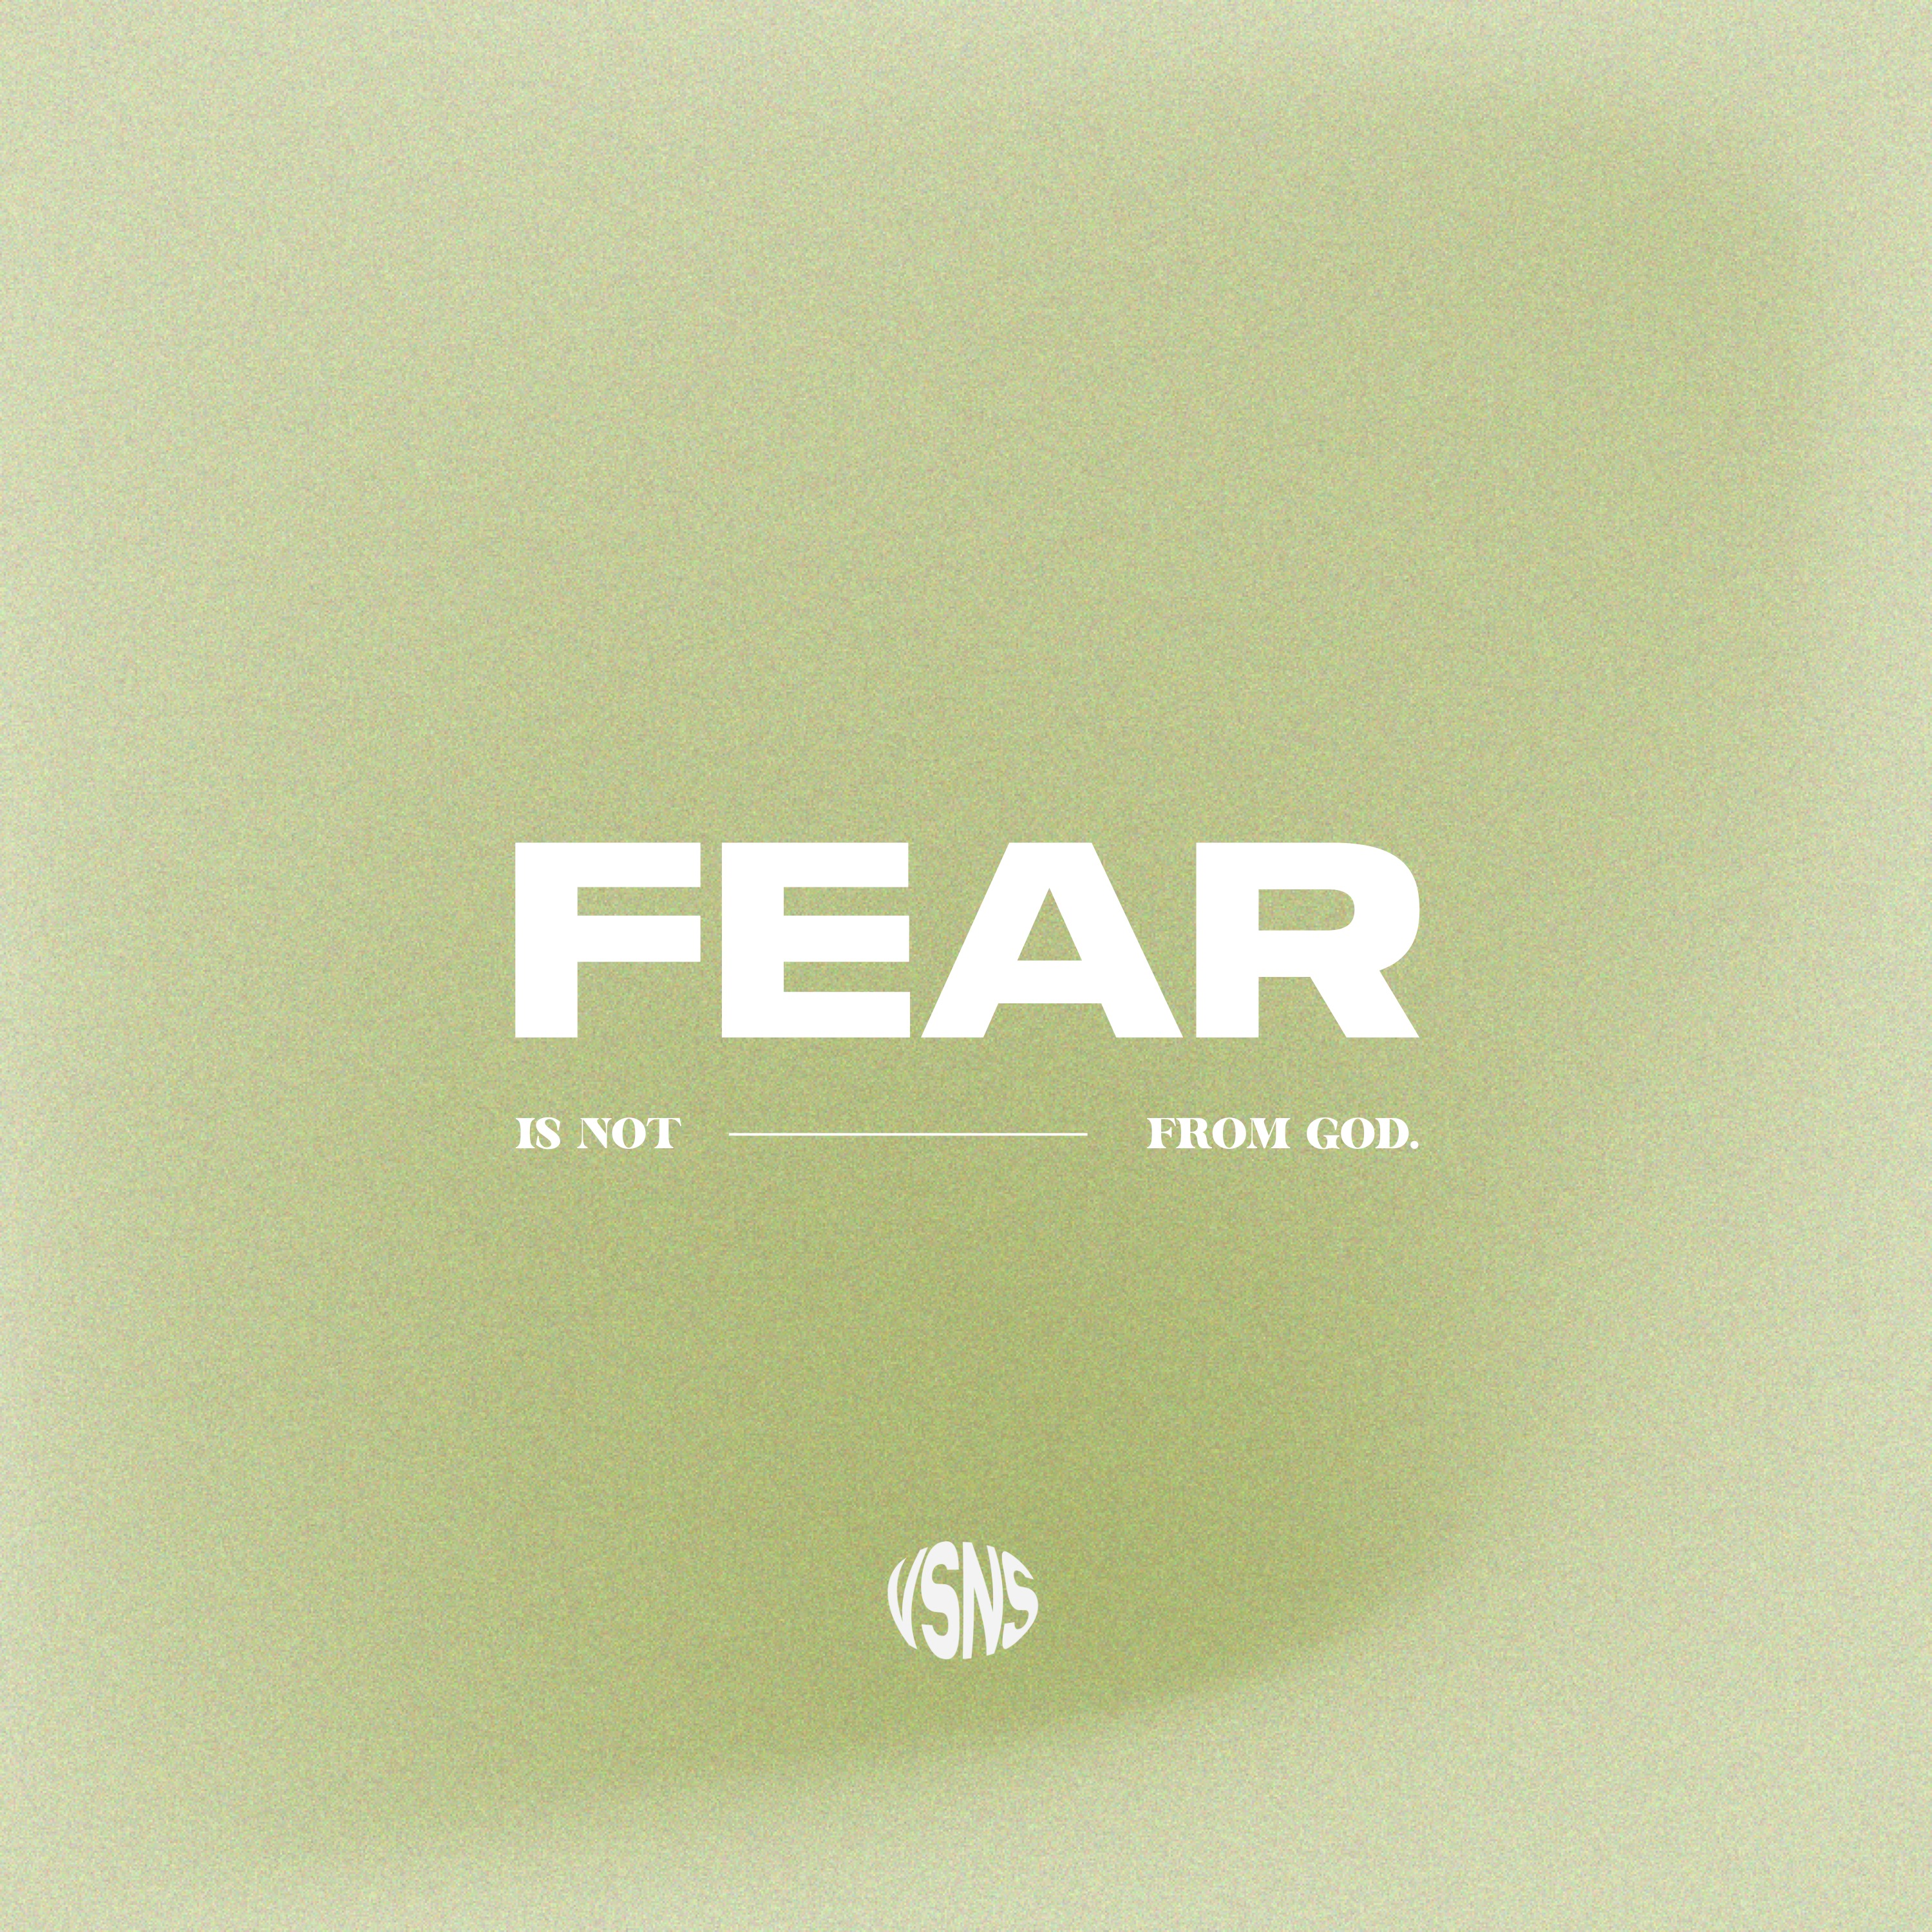 Fear isn't from God